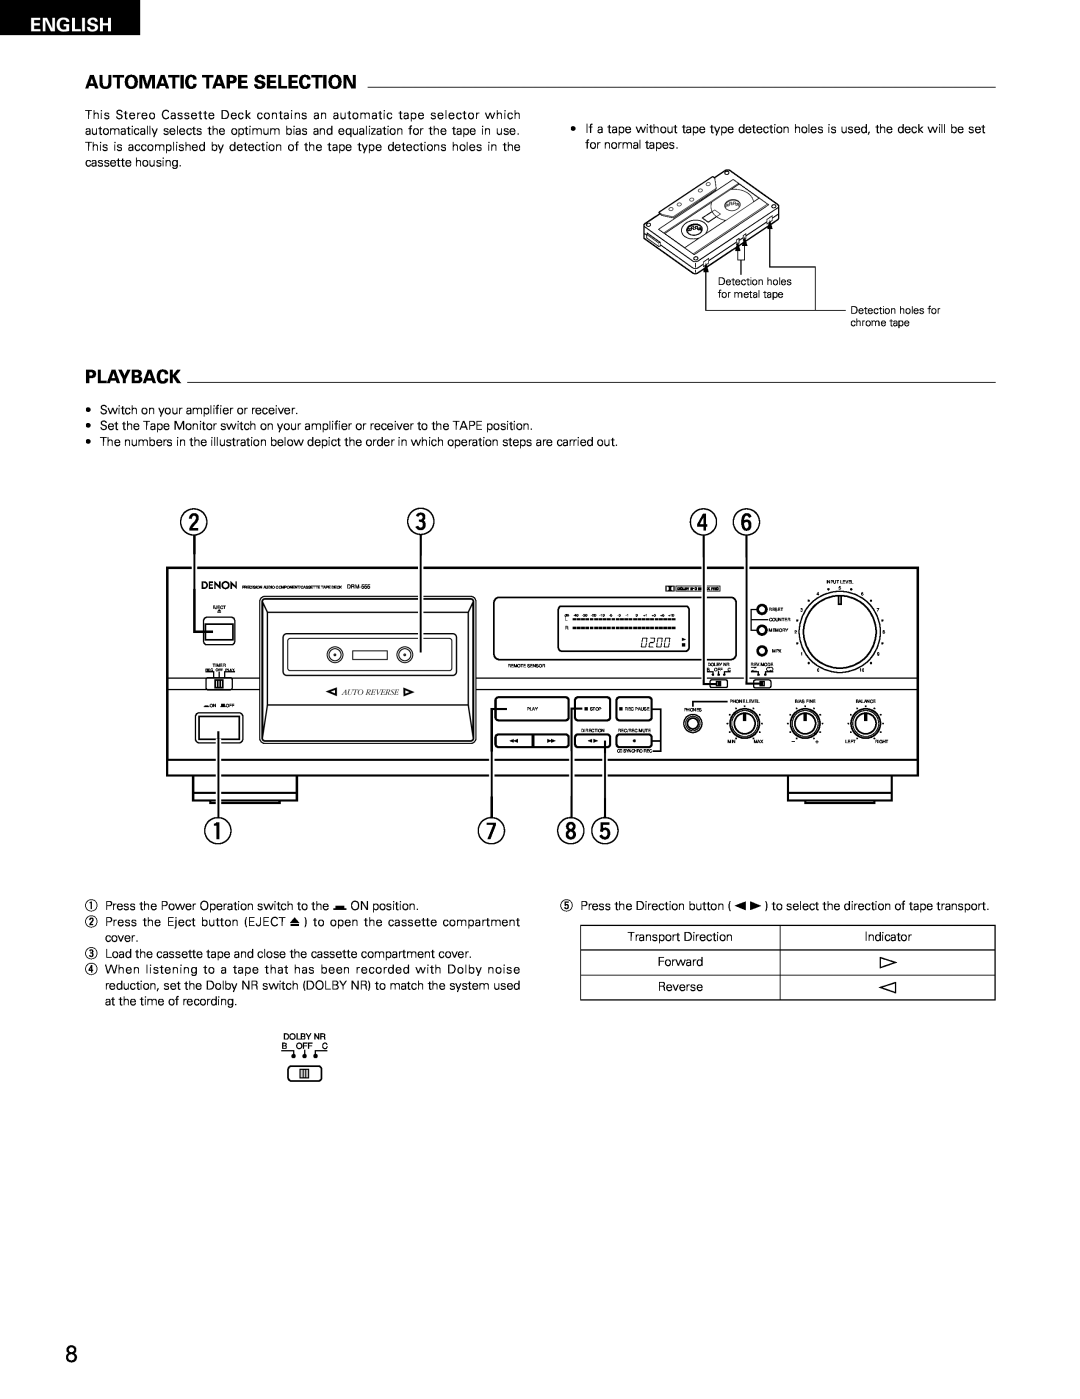 Denon DRM-555 manual Automatic Tape Selection, Playback, English 